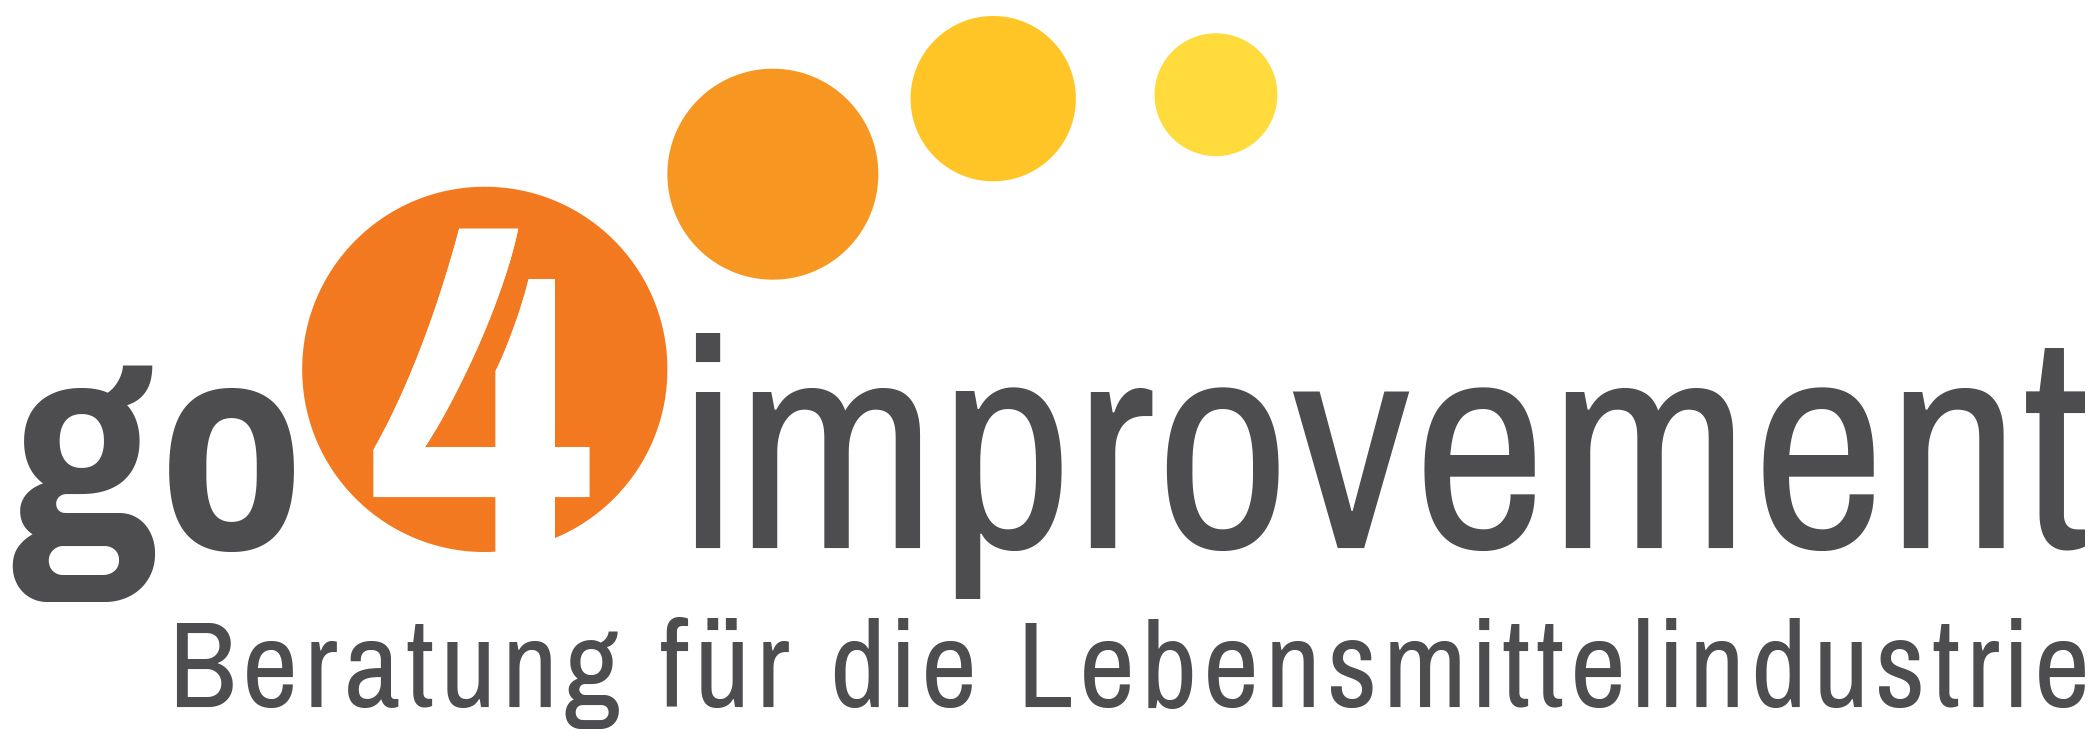 go4improvement logo